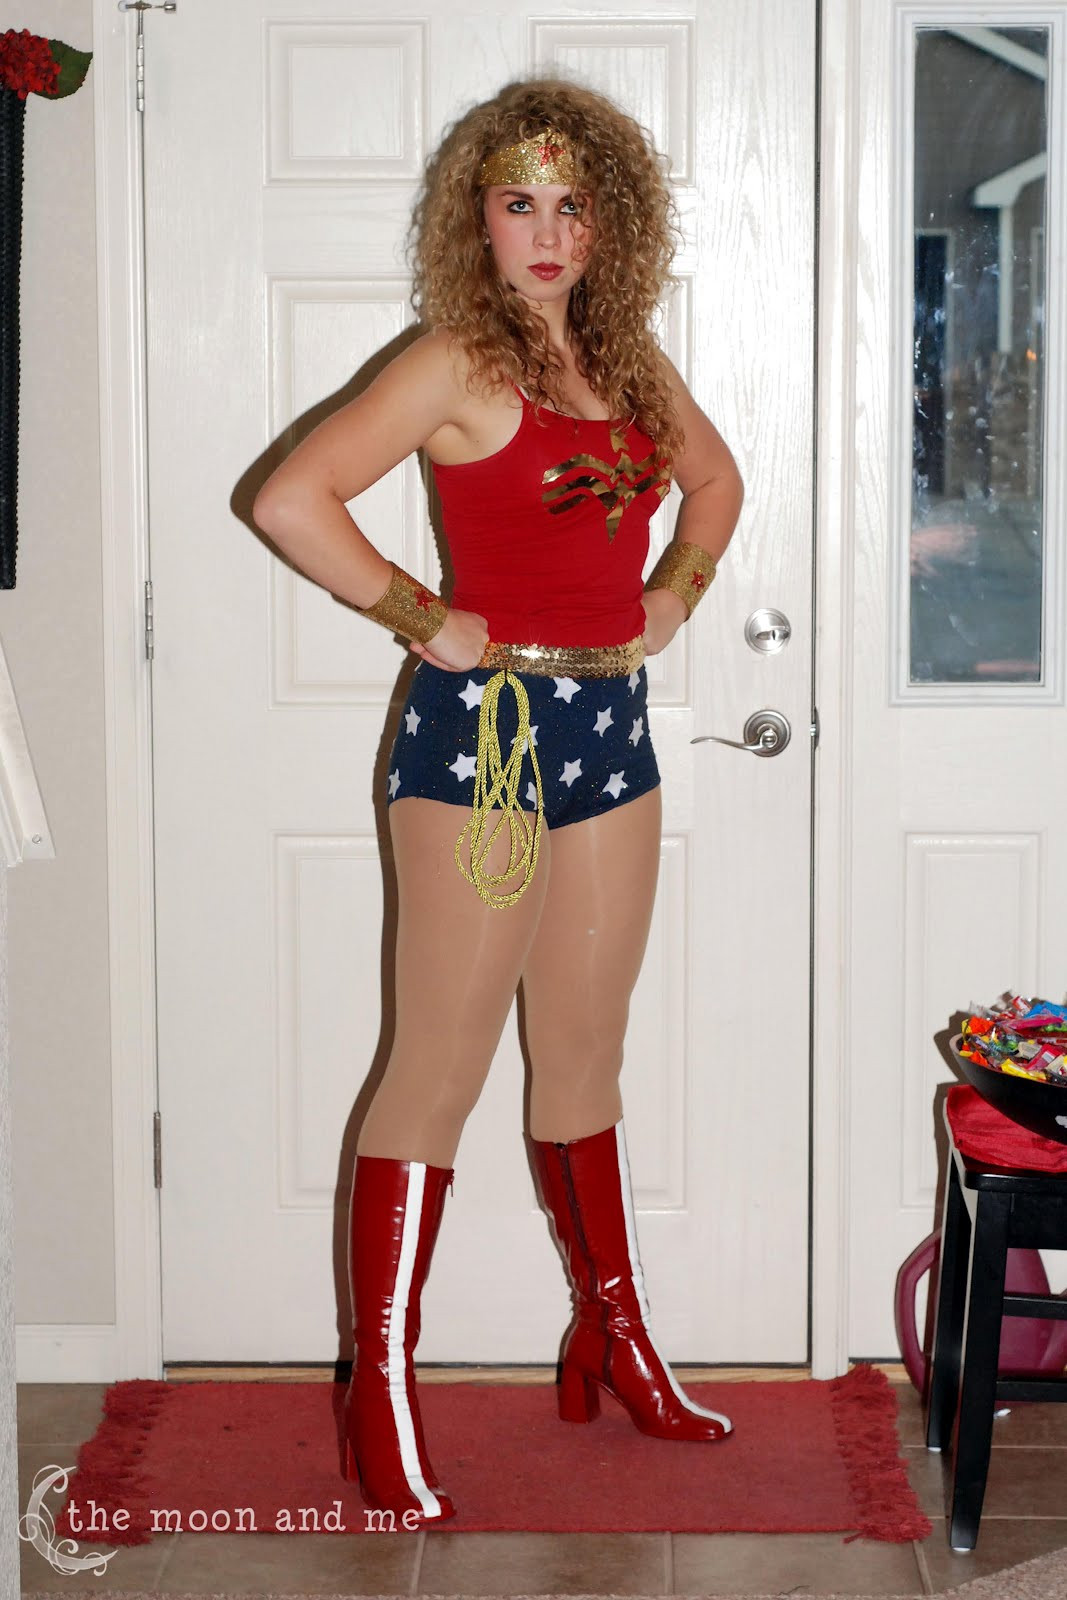 Best ideas about Wonder Woman Costume DIY
. Save or Pin The Moon and Me DIY Wonder Woman Costume Now.